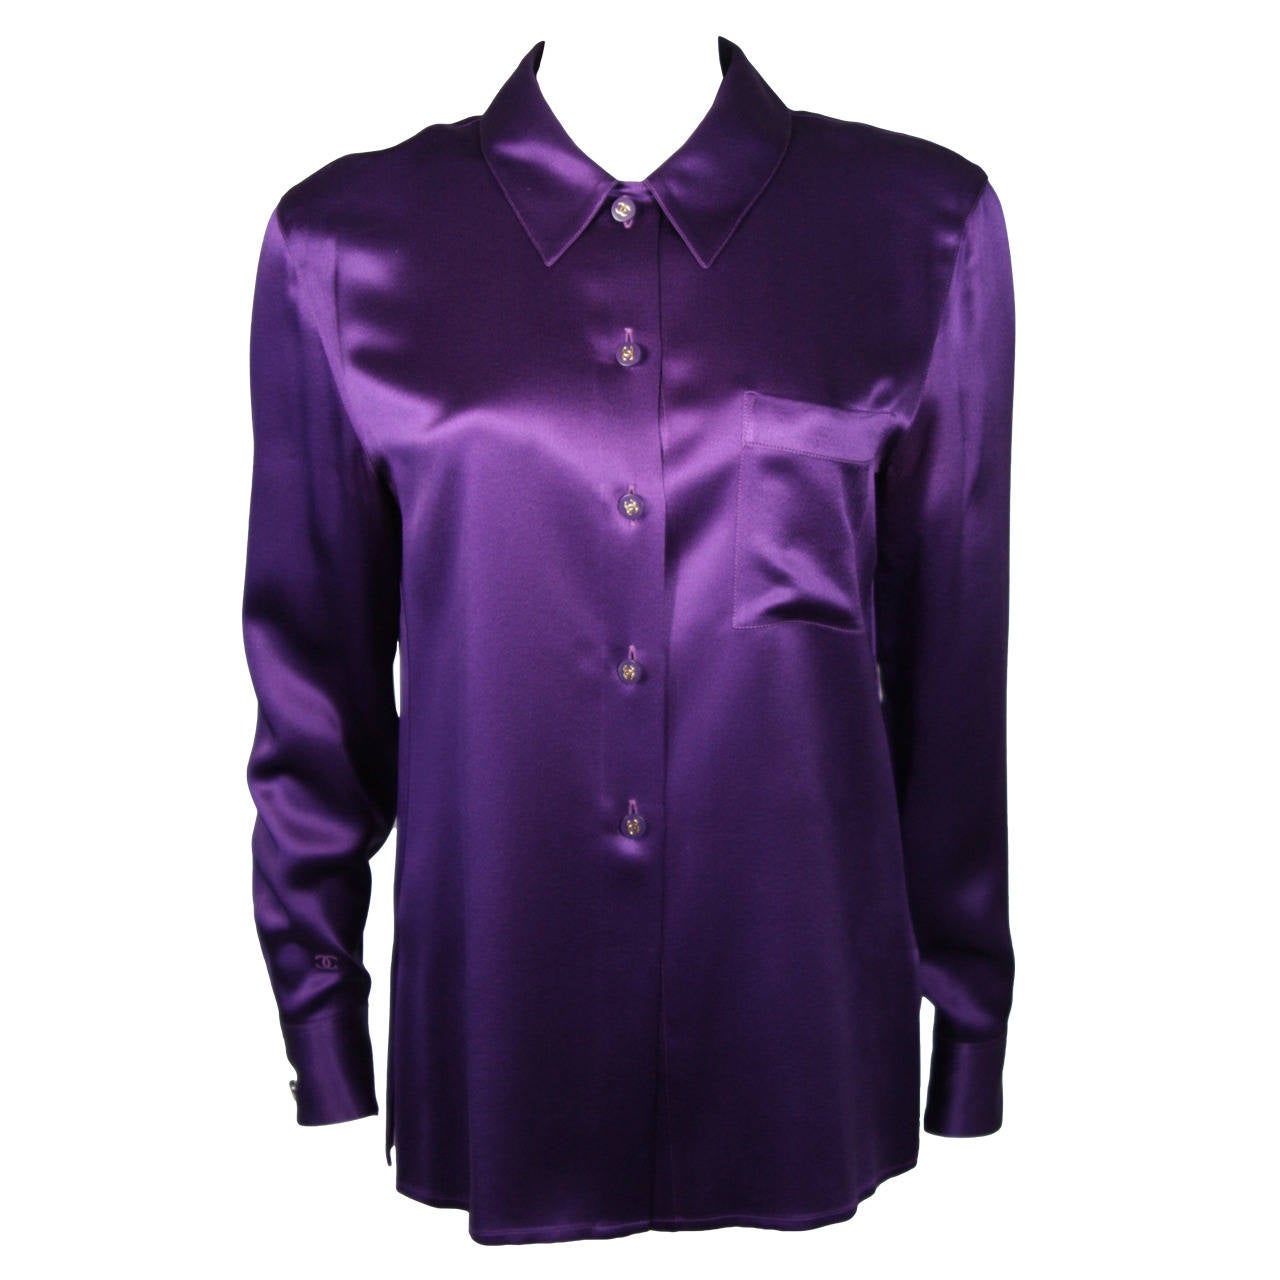 Chanel Purple Silk Blouse Size Large